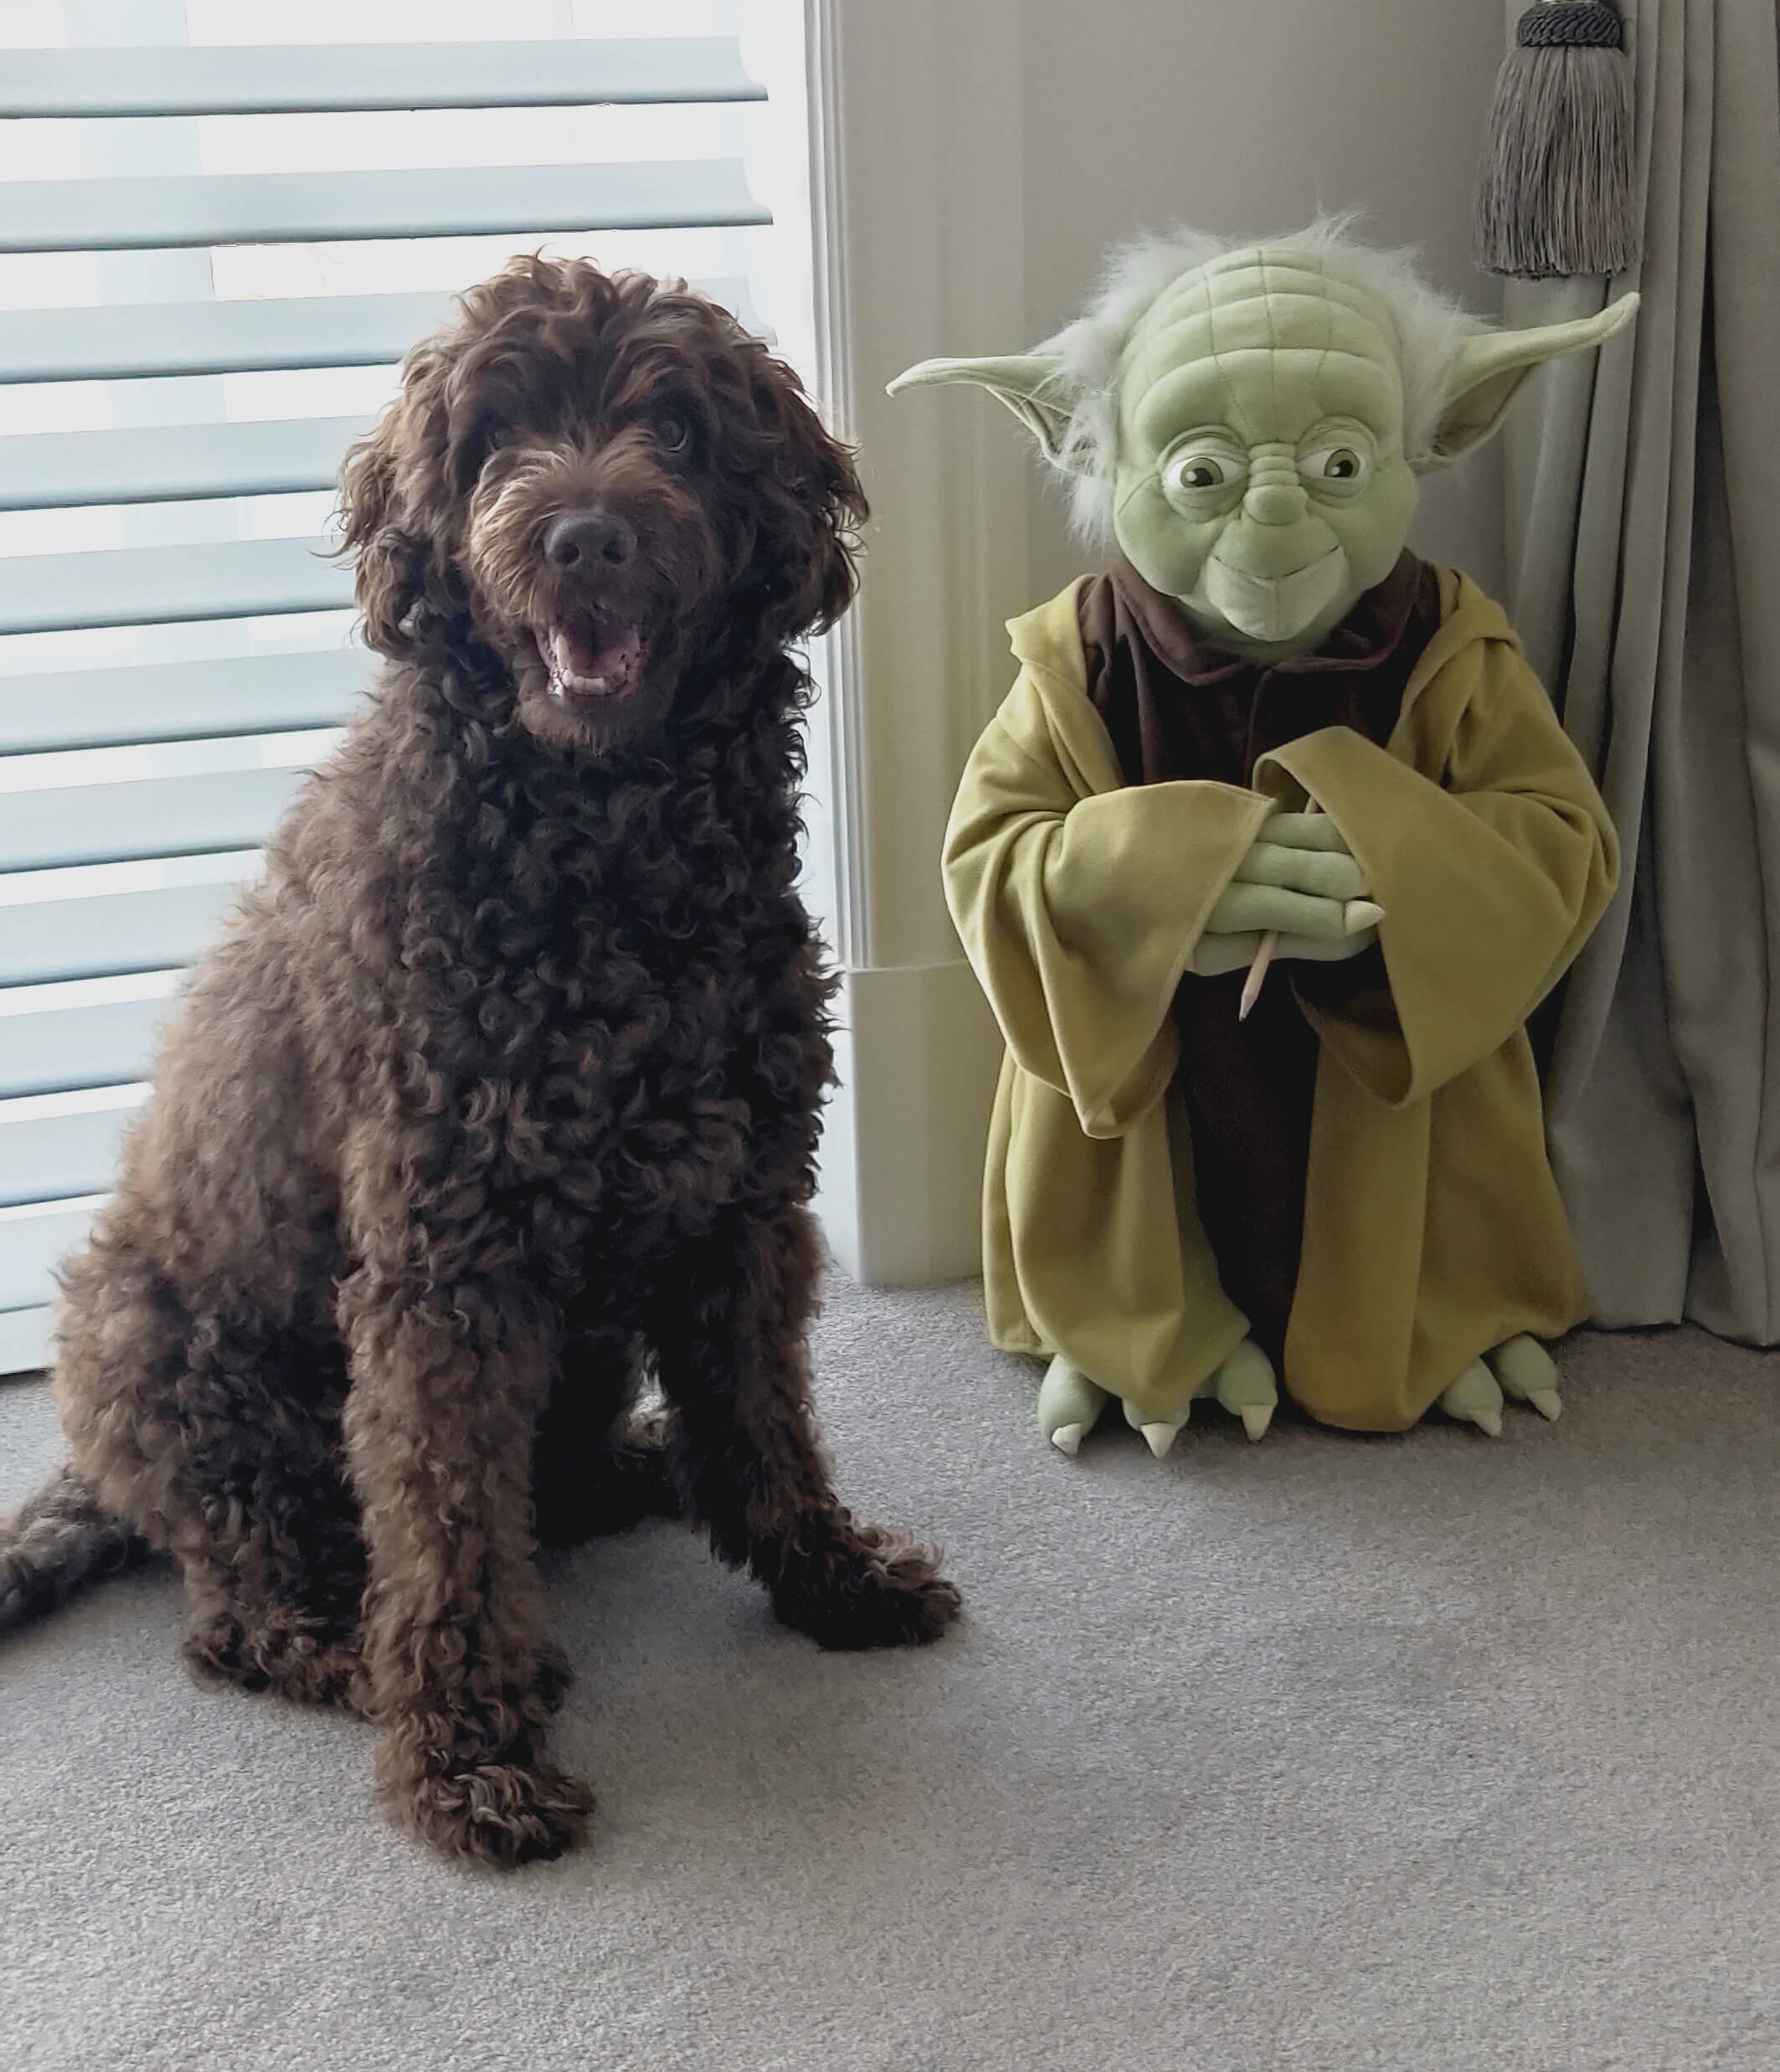 Hugo the dog with Yoda